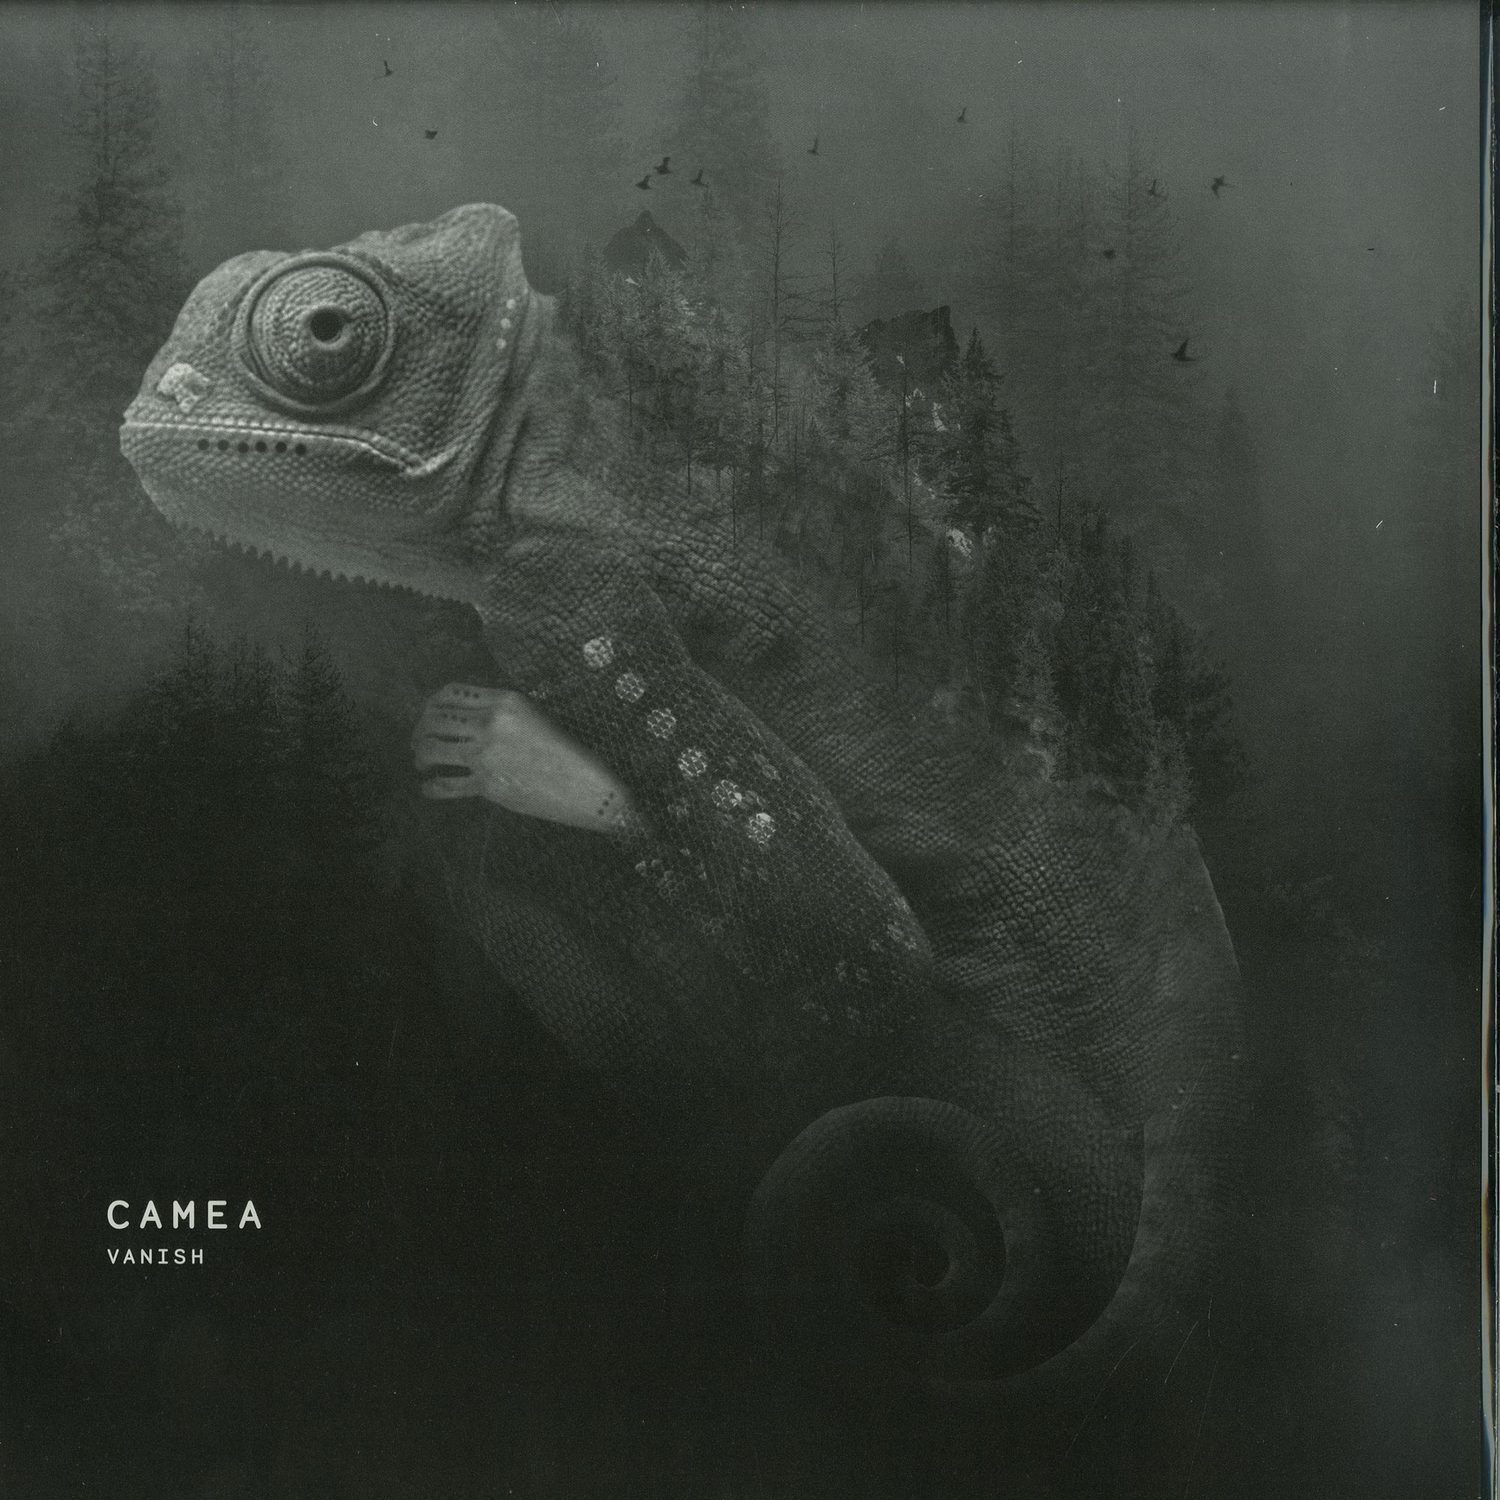 Camea - VANISH EP